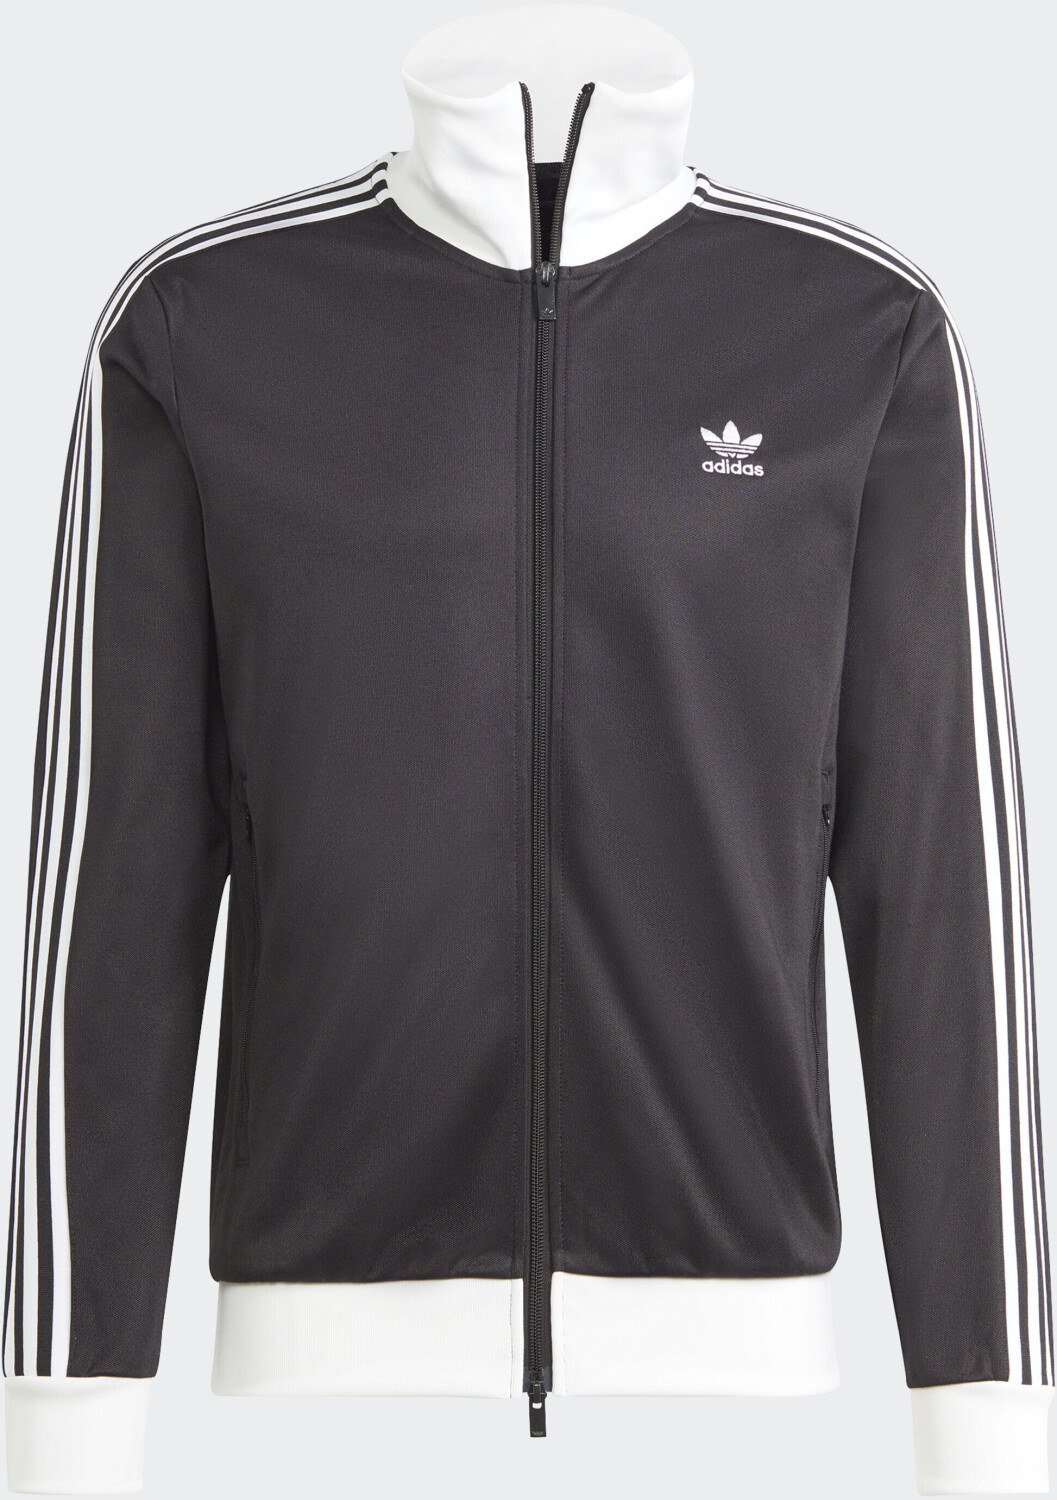 € Preisvergleich 51,19 adicolor Beckenbauer bei Adidas Originals Jacket (II5763) Classics | ab black/white Man